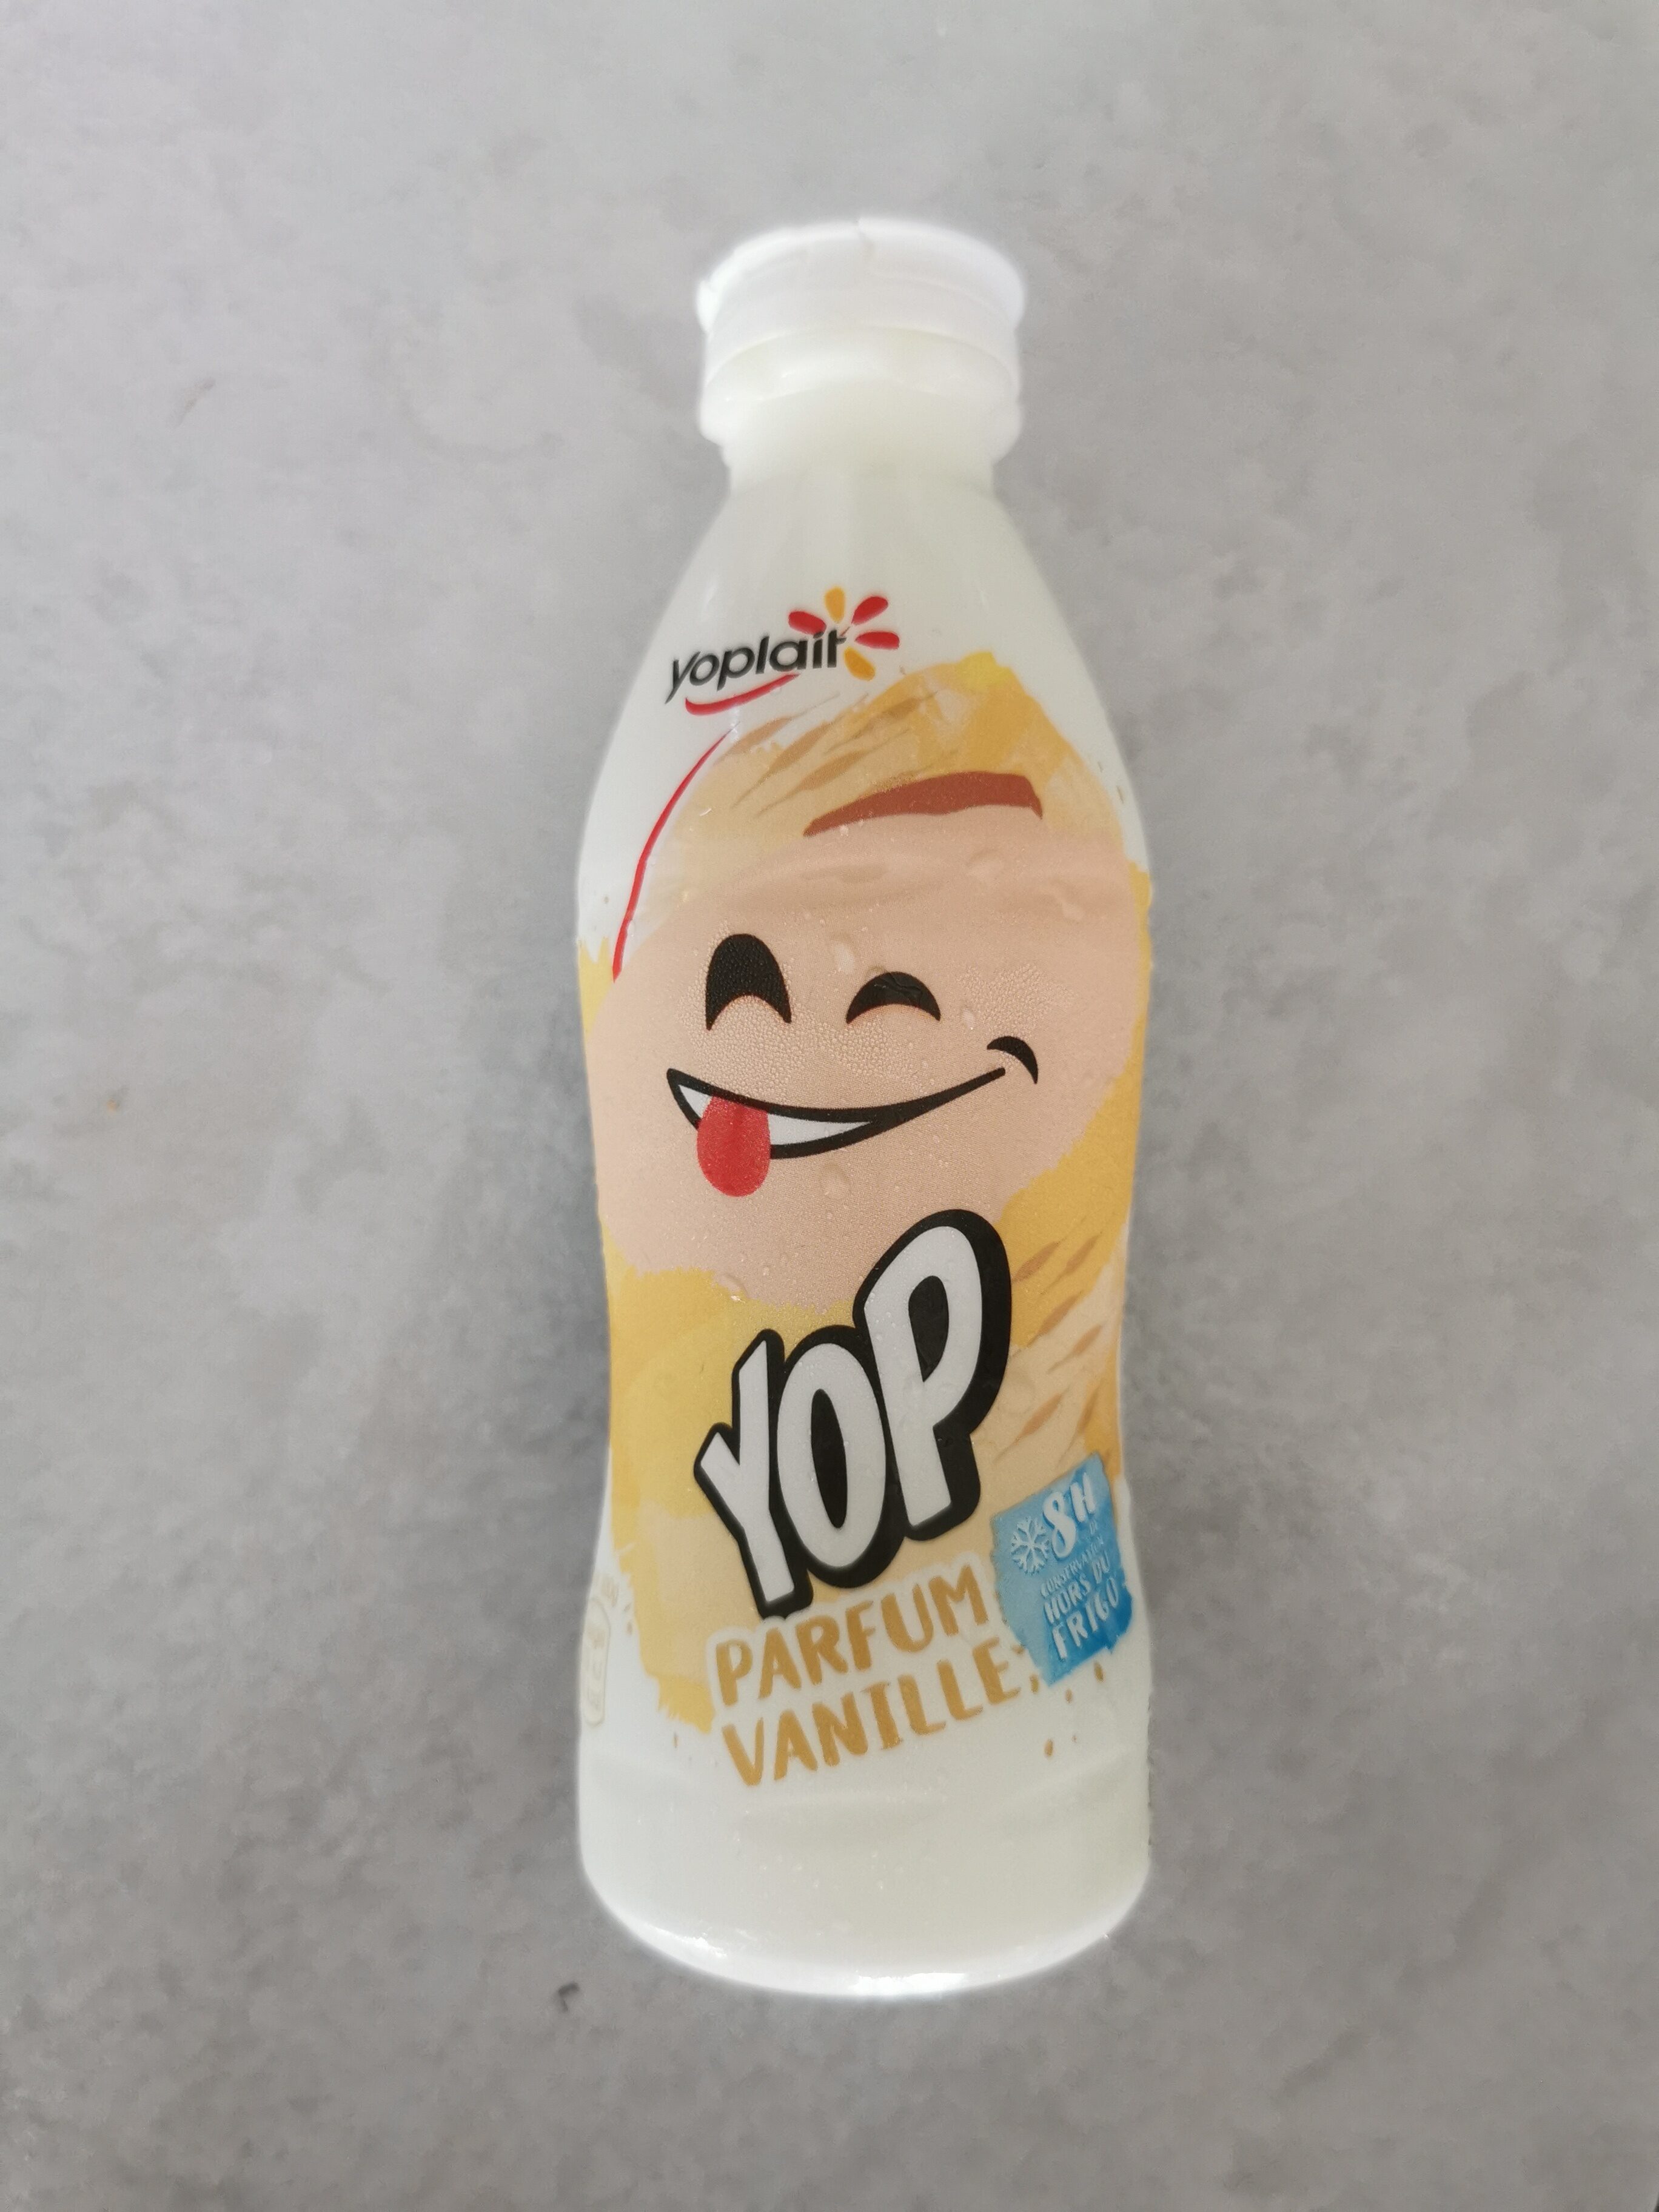 Yop parfum vanille - Product - fr